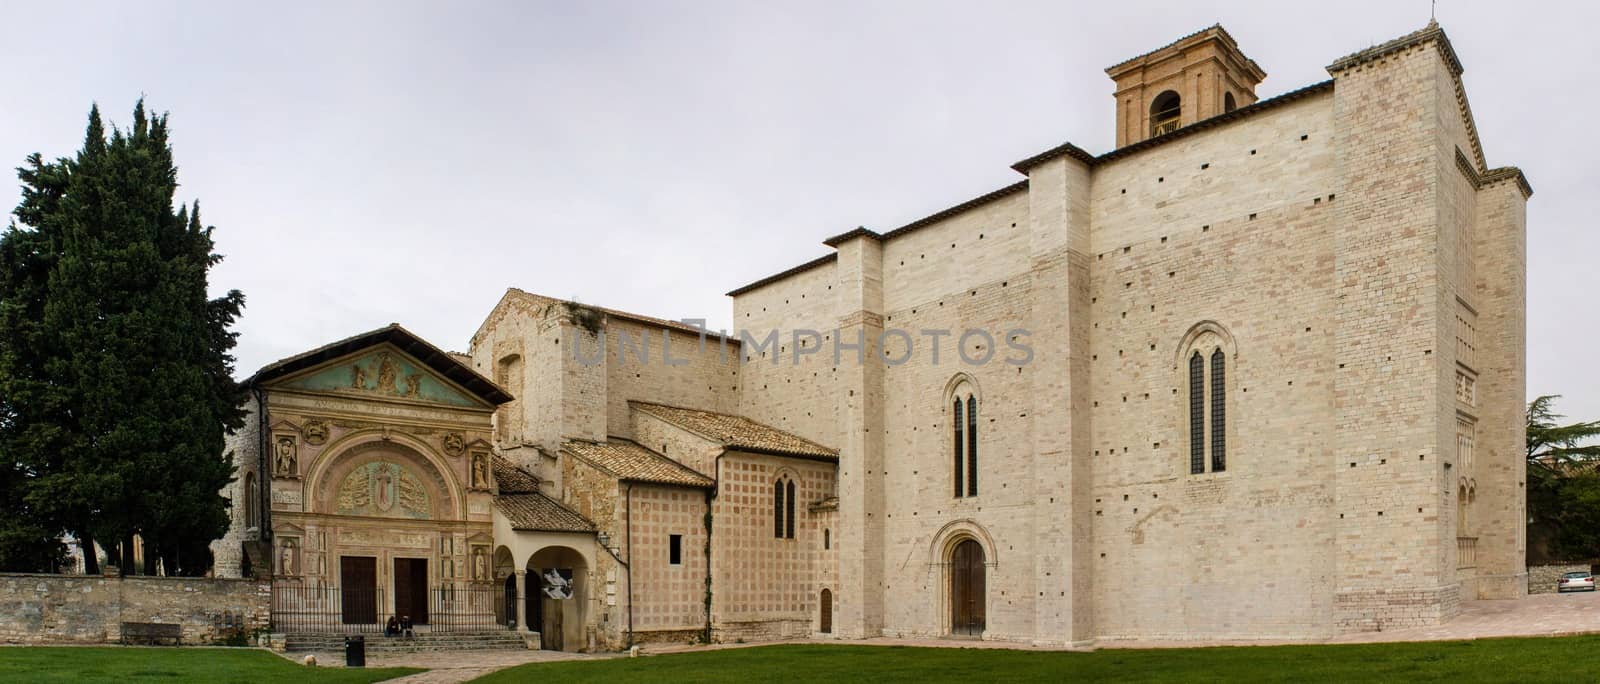 The Oratory of San Bernardino in Perugia, by goghy73